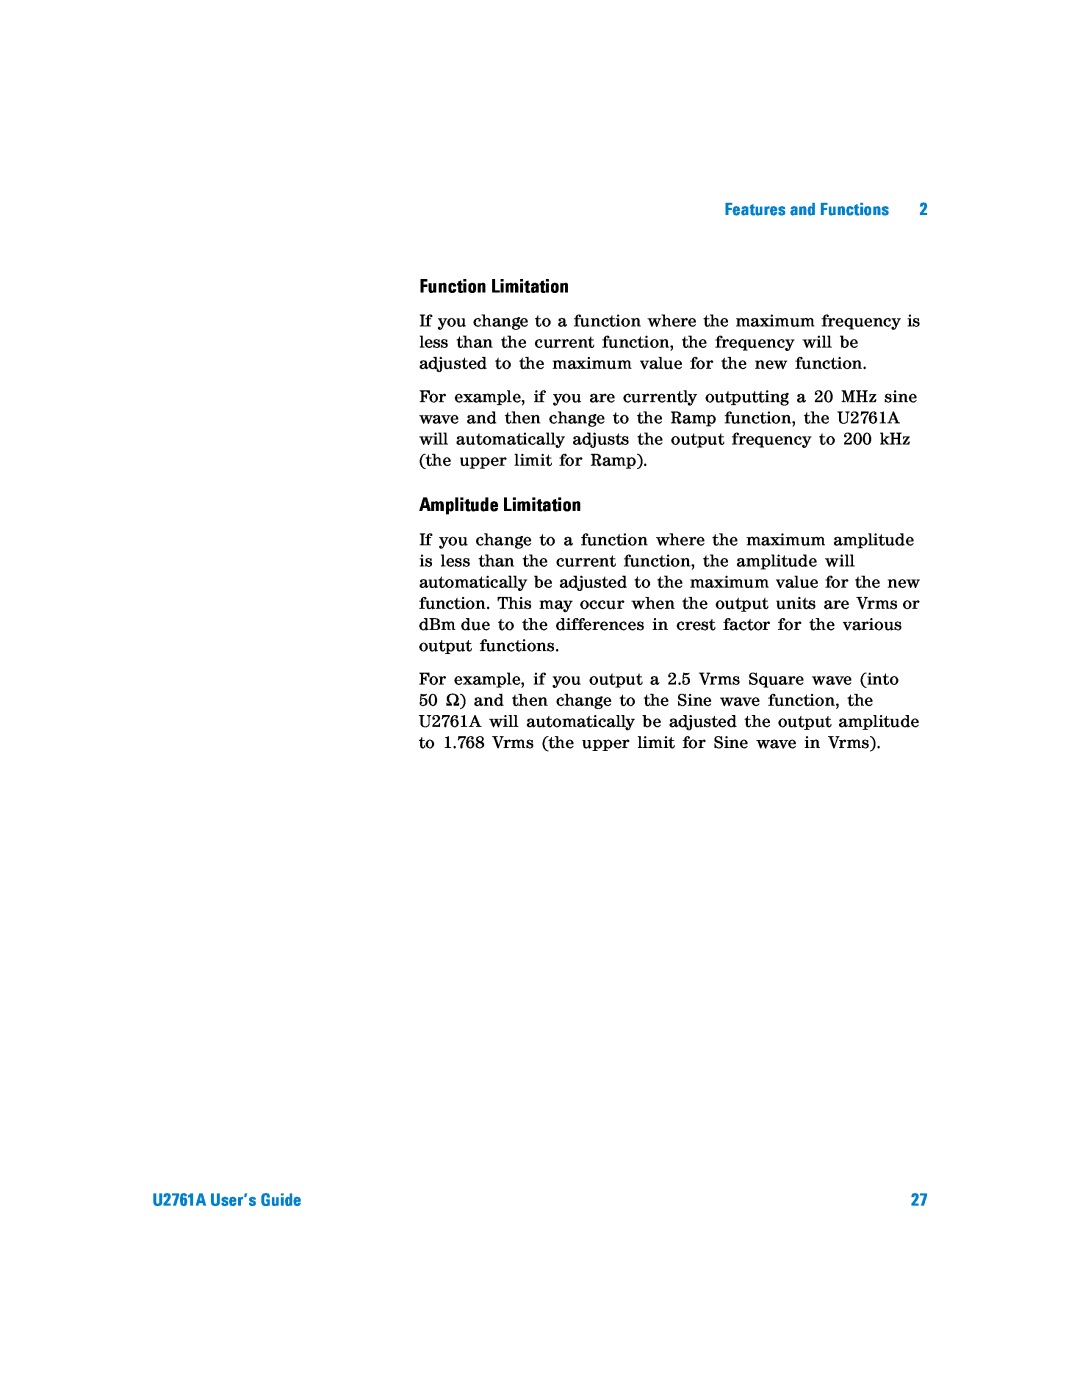 Agilent Technologies manual Function Limitation, Amplitude Limitation, U2761A User’s Guide 